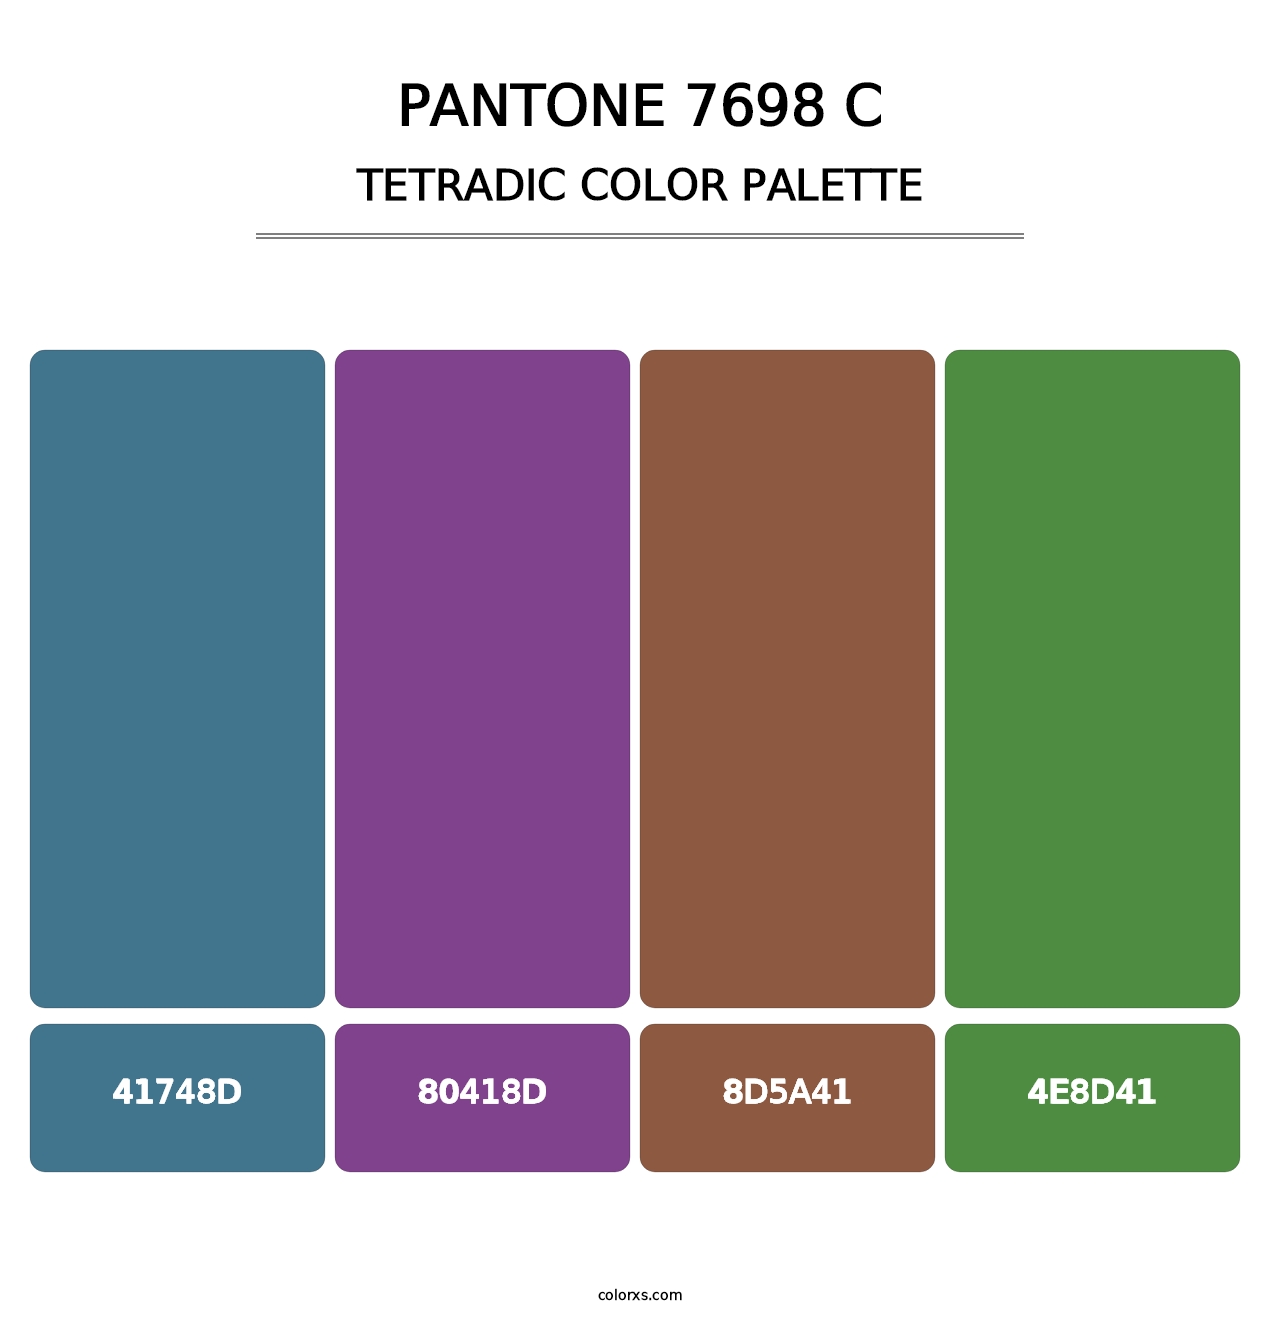 PANTONE 7698 C - Tetradic Color Palette